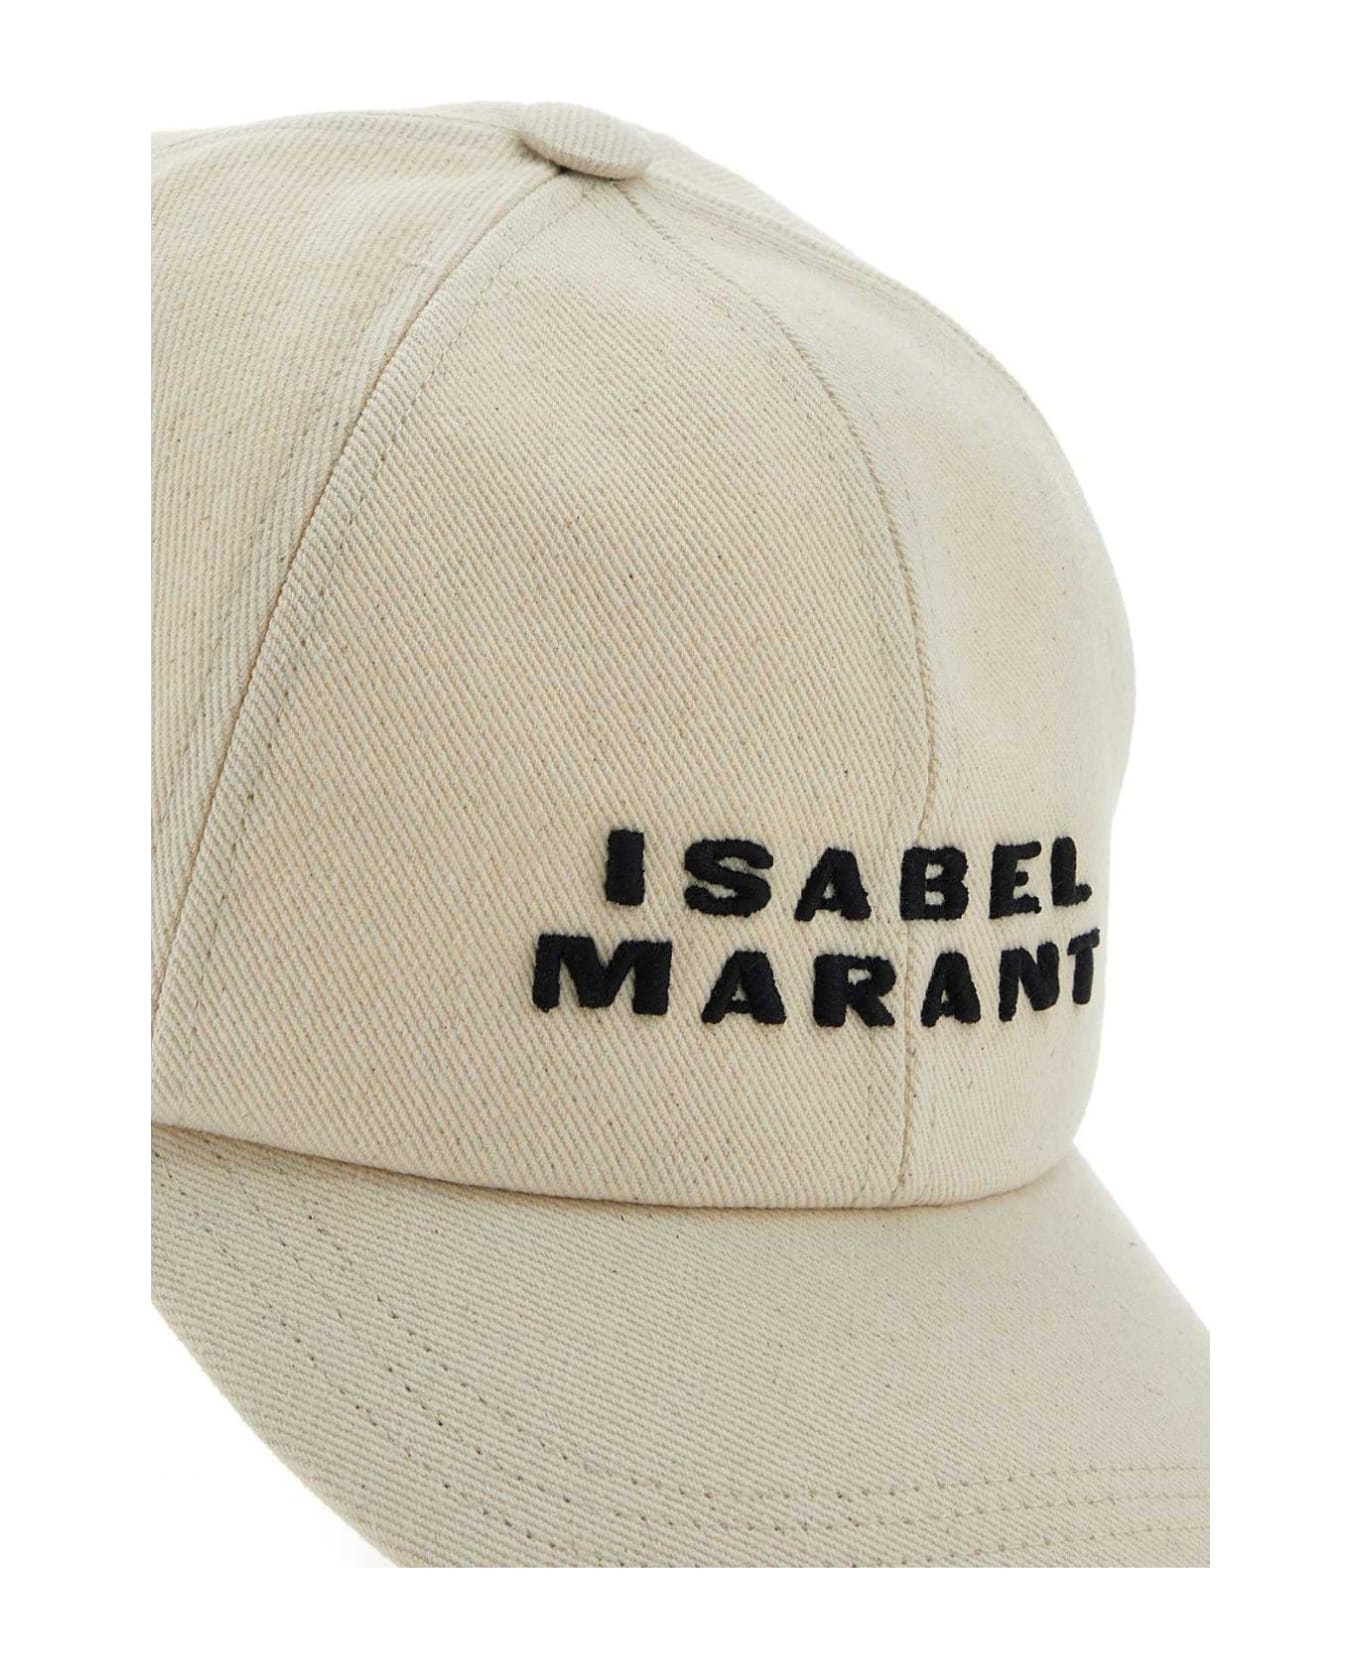 Isabel Marant Logo Embroidered Baseball Cap - Beige 帽子